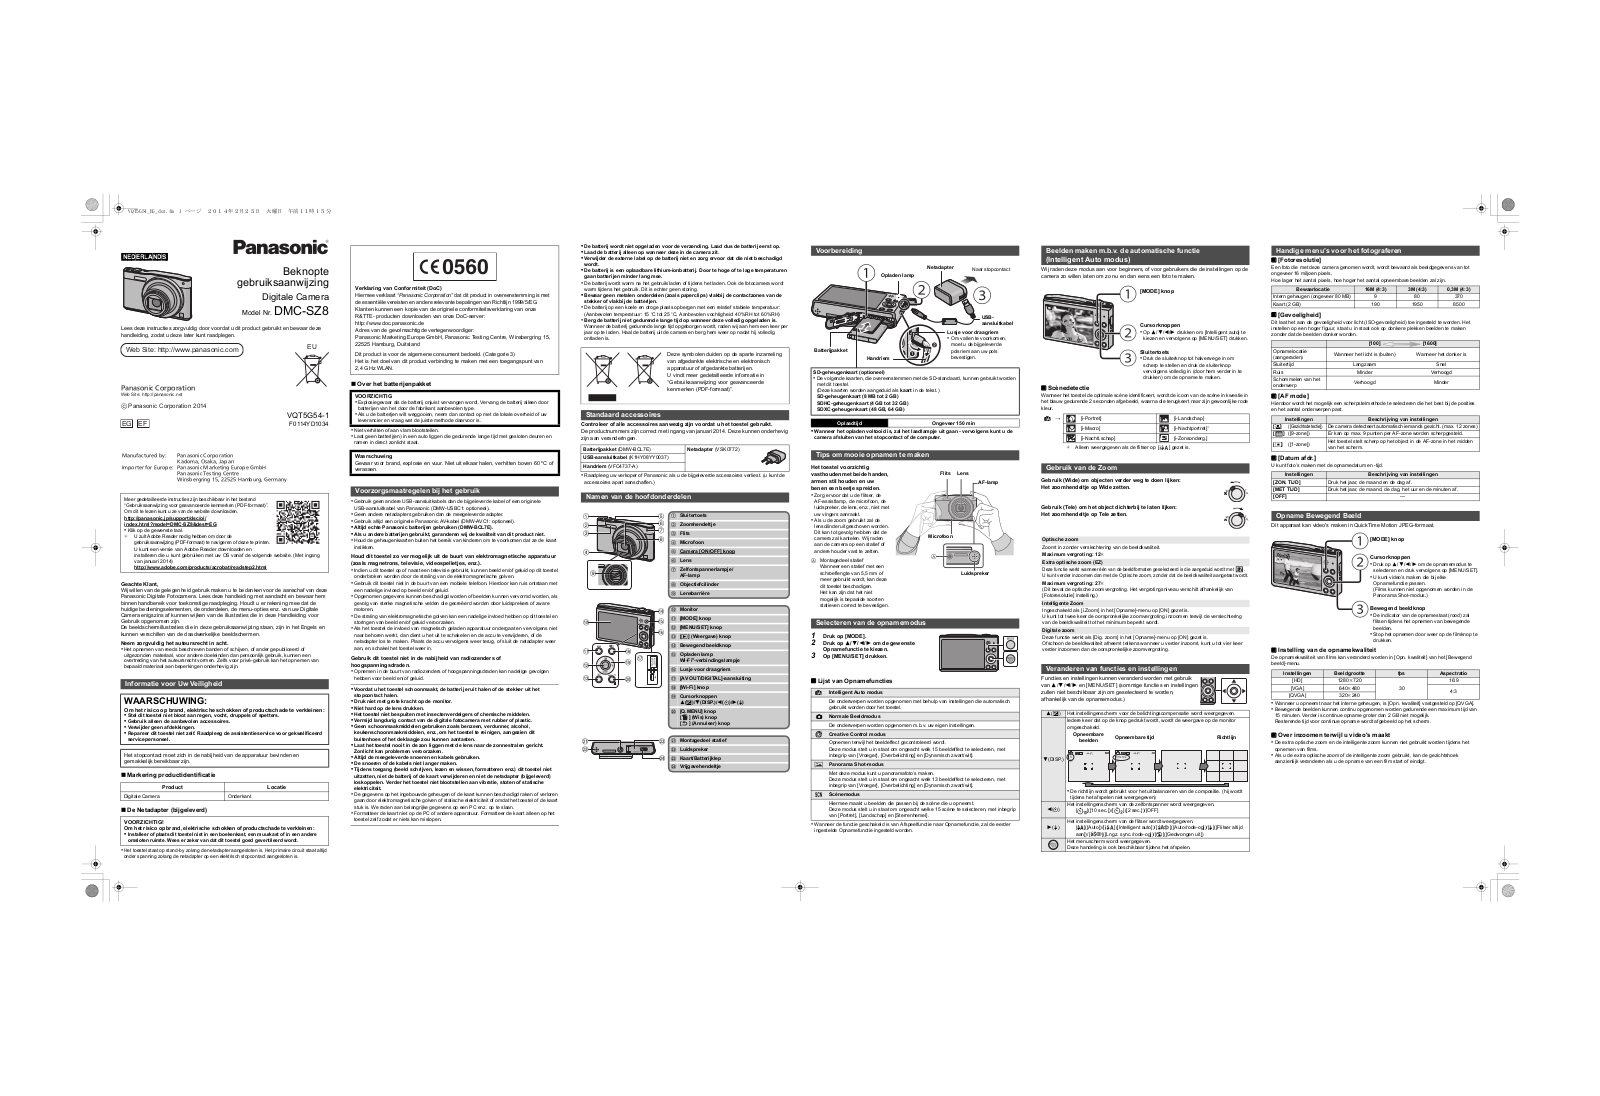 Panasonic LUMIX DMC-SZ8 User Manual